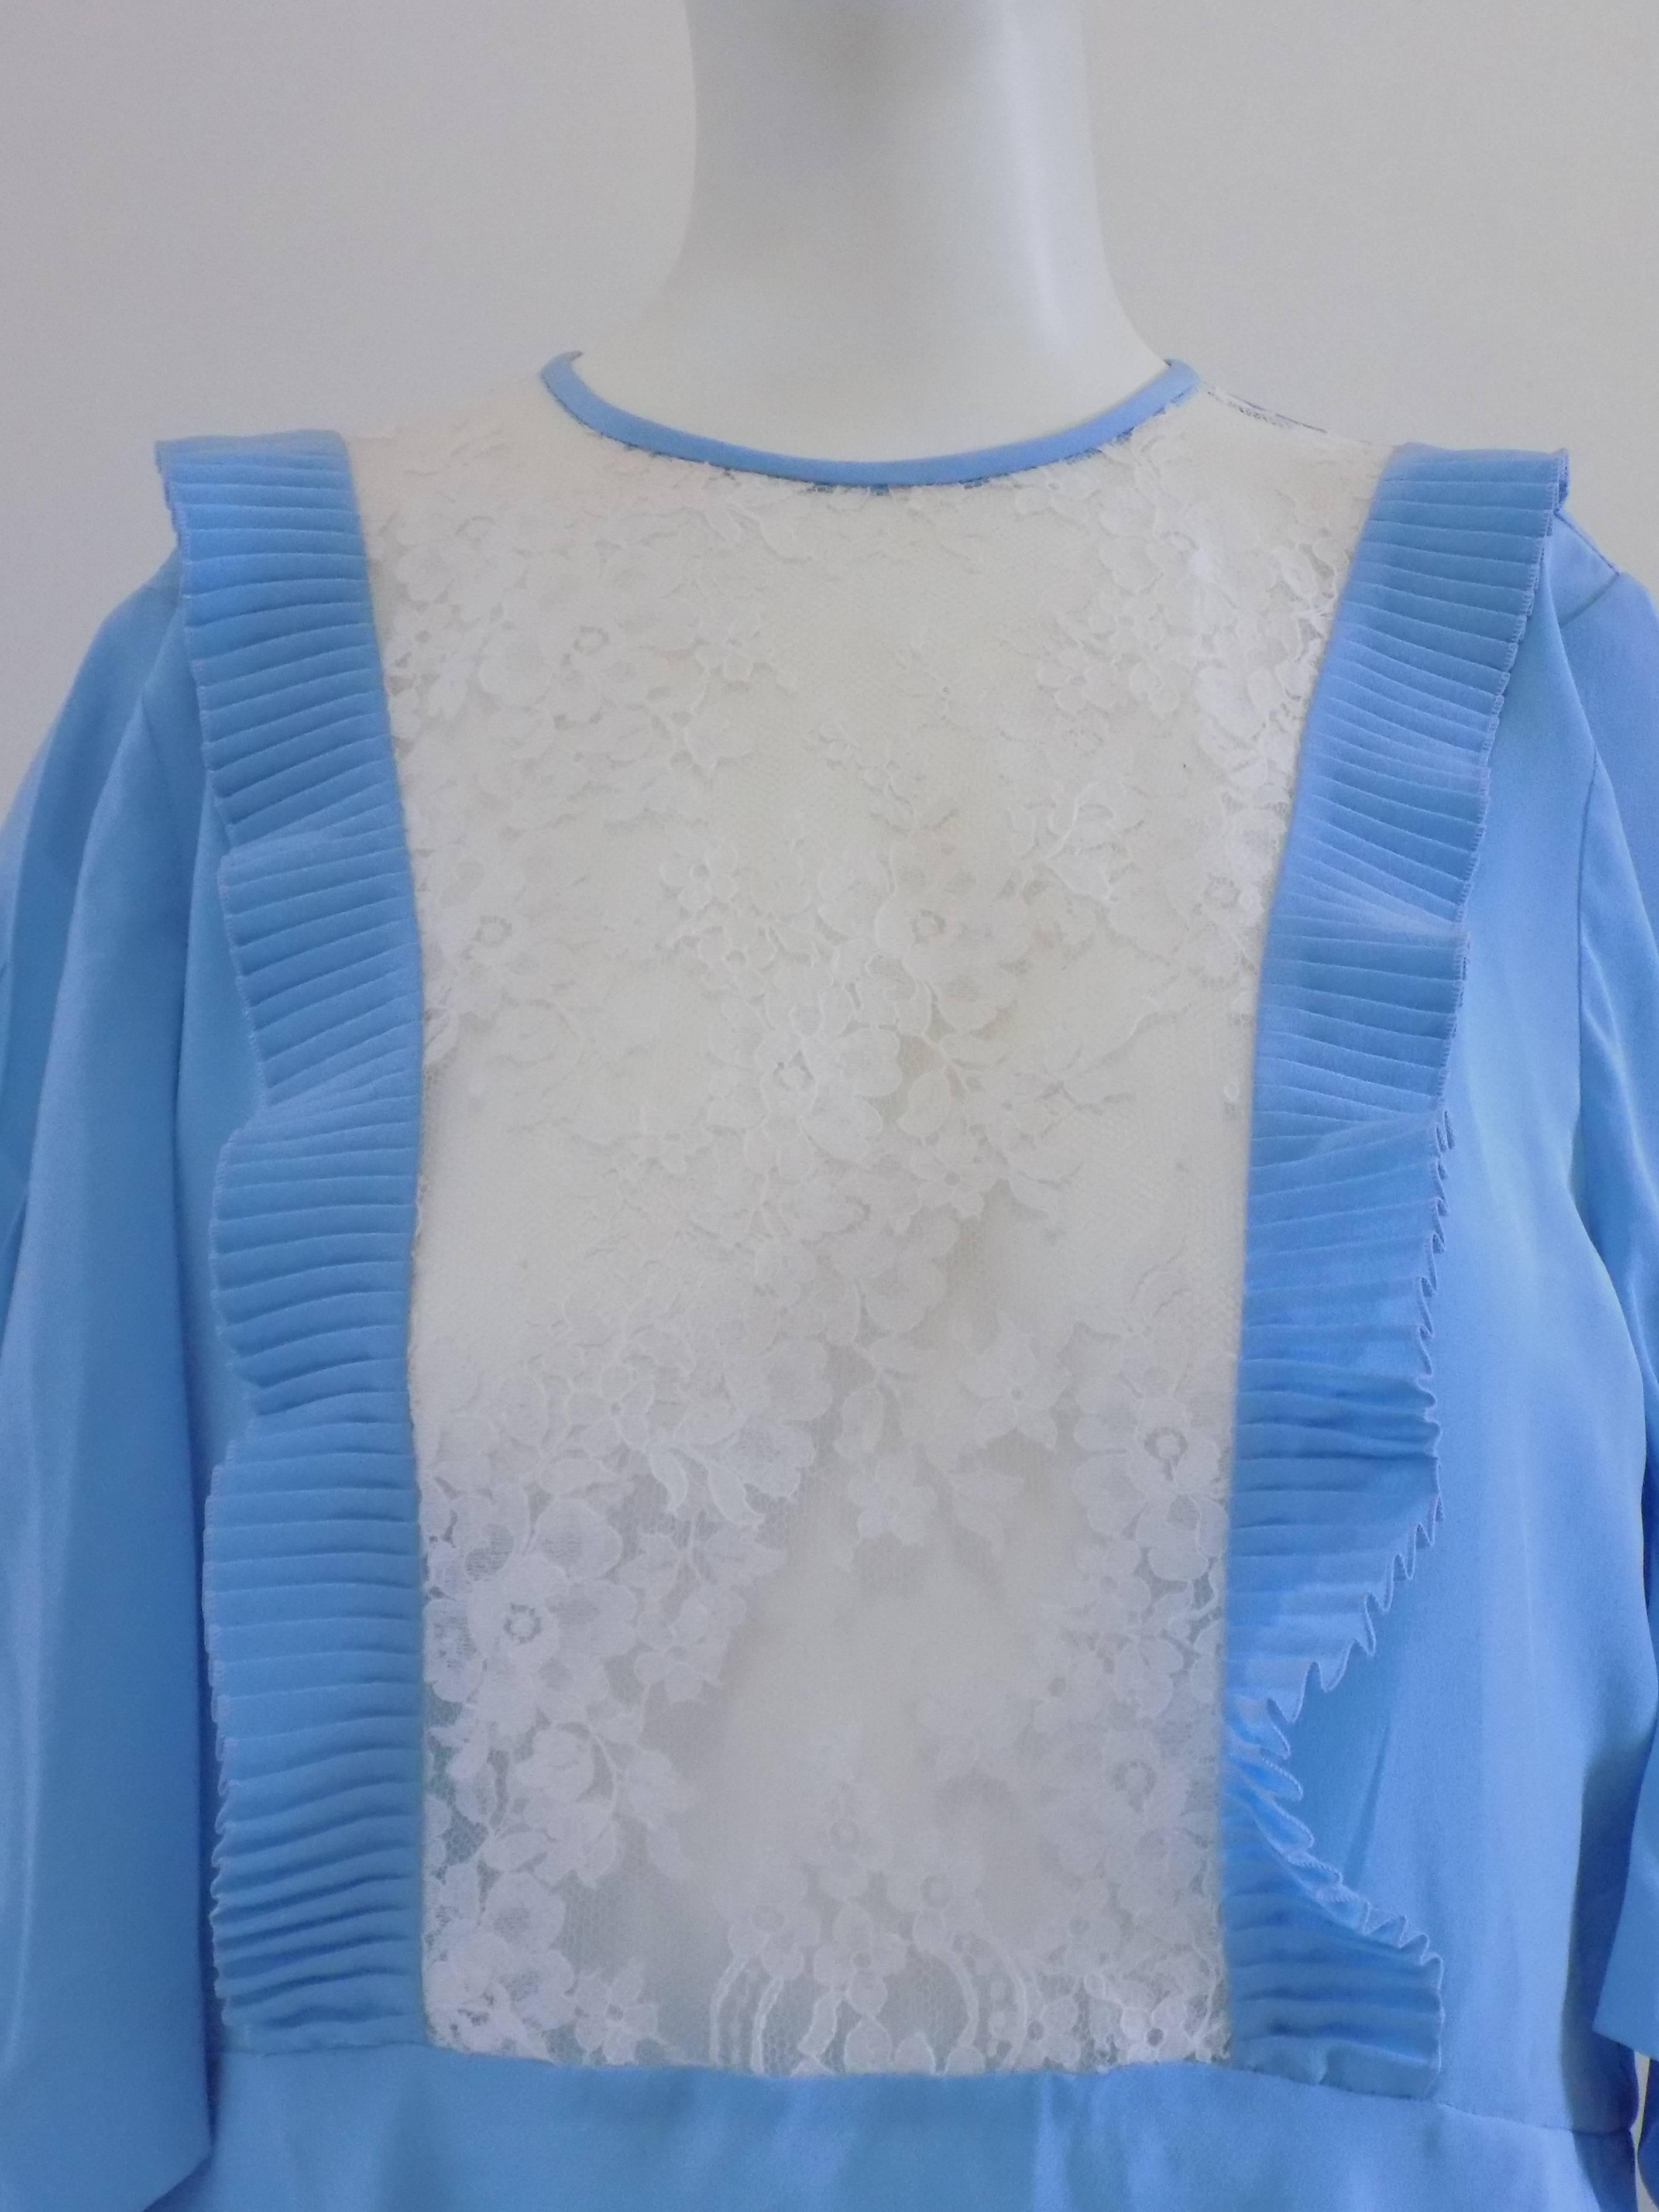 Miu Miu Light blue dress

in italian size range 42 

lenght 78 cm
bust 76 cm
sleeve lenght 32 cm